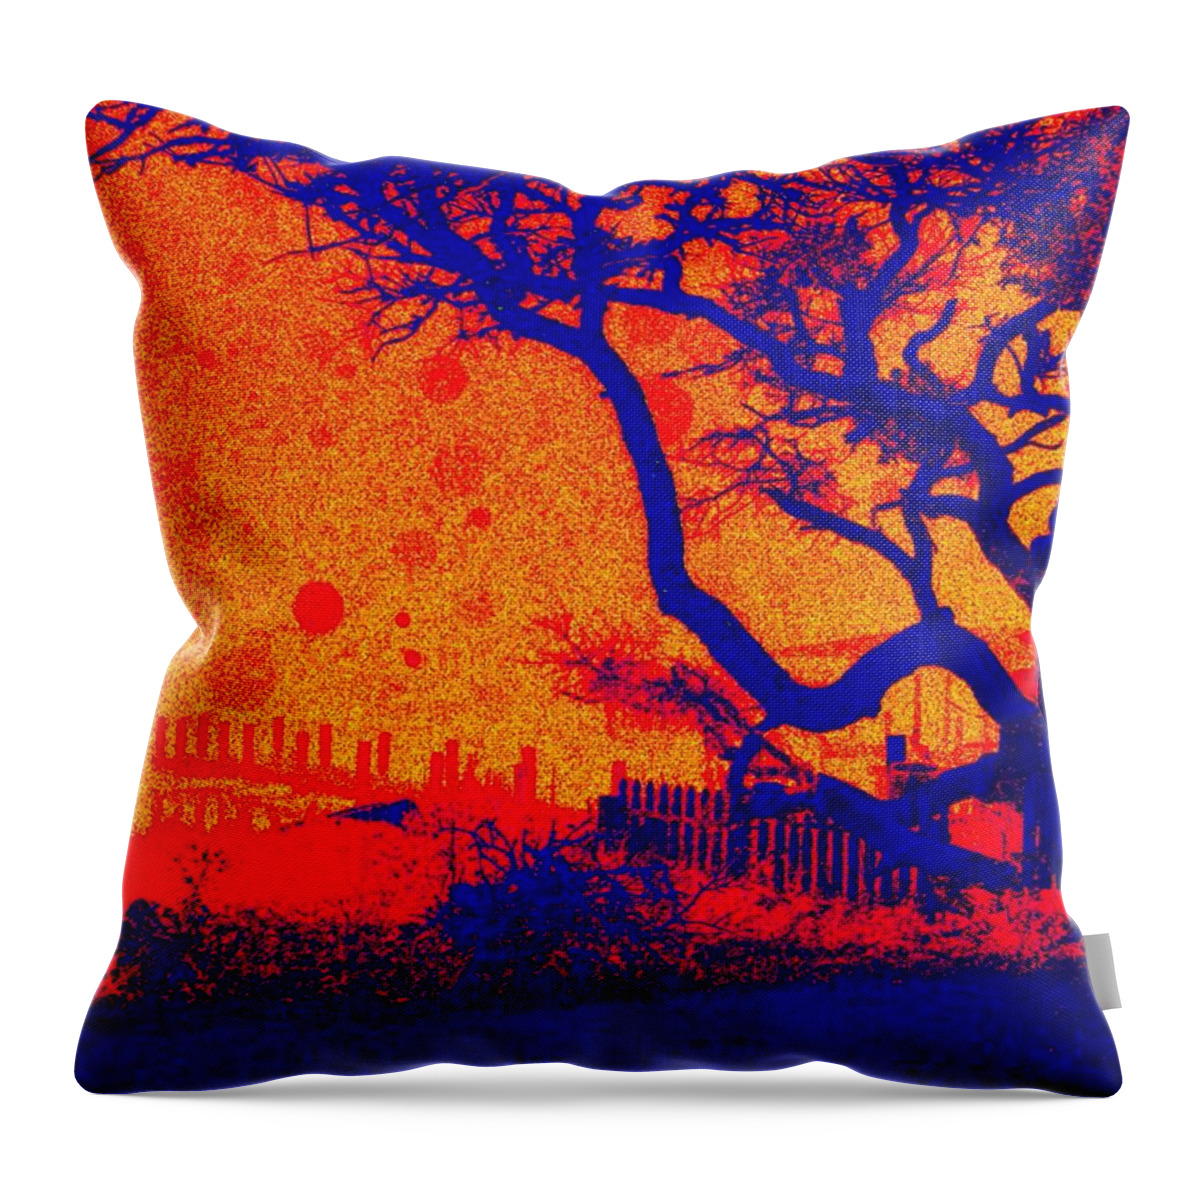 Tangerine Throw Pillow featuring the digital art Tangerine Twilight by Larry Beat